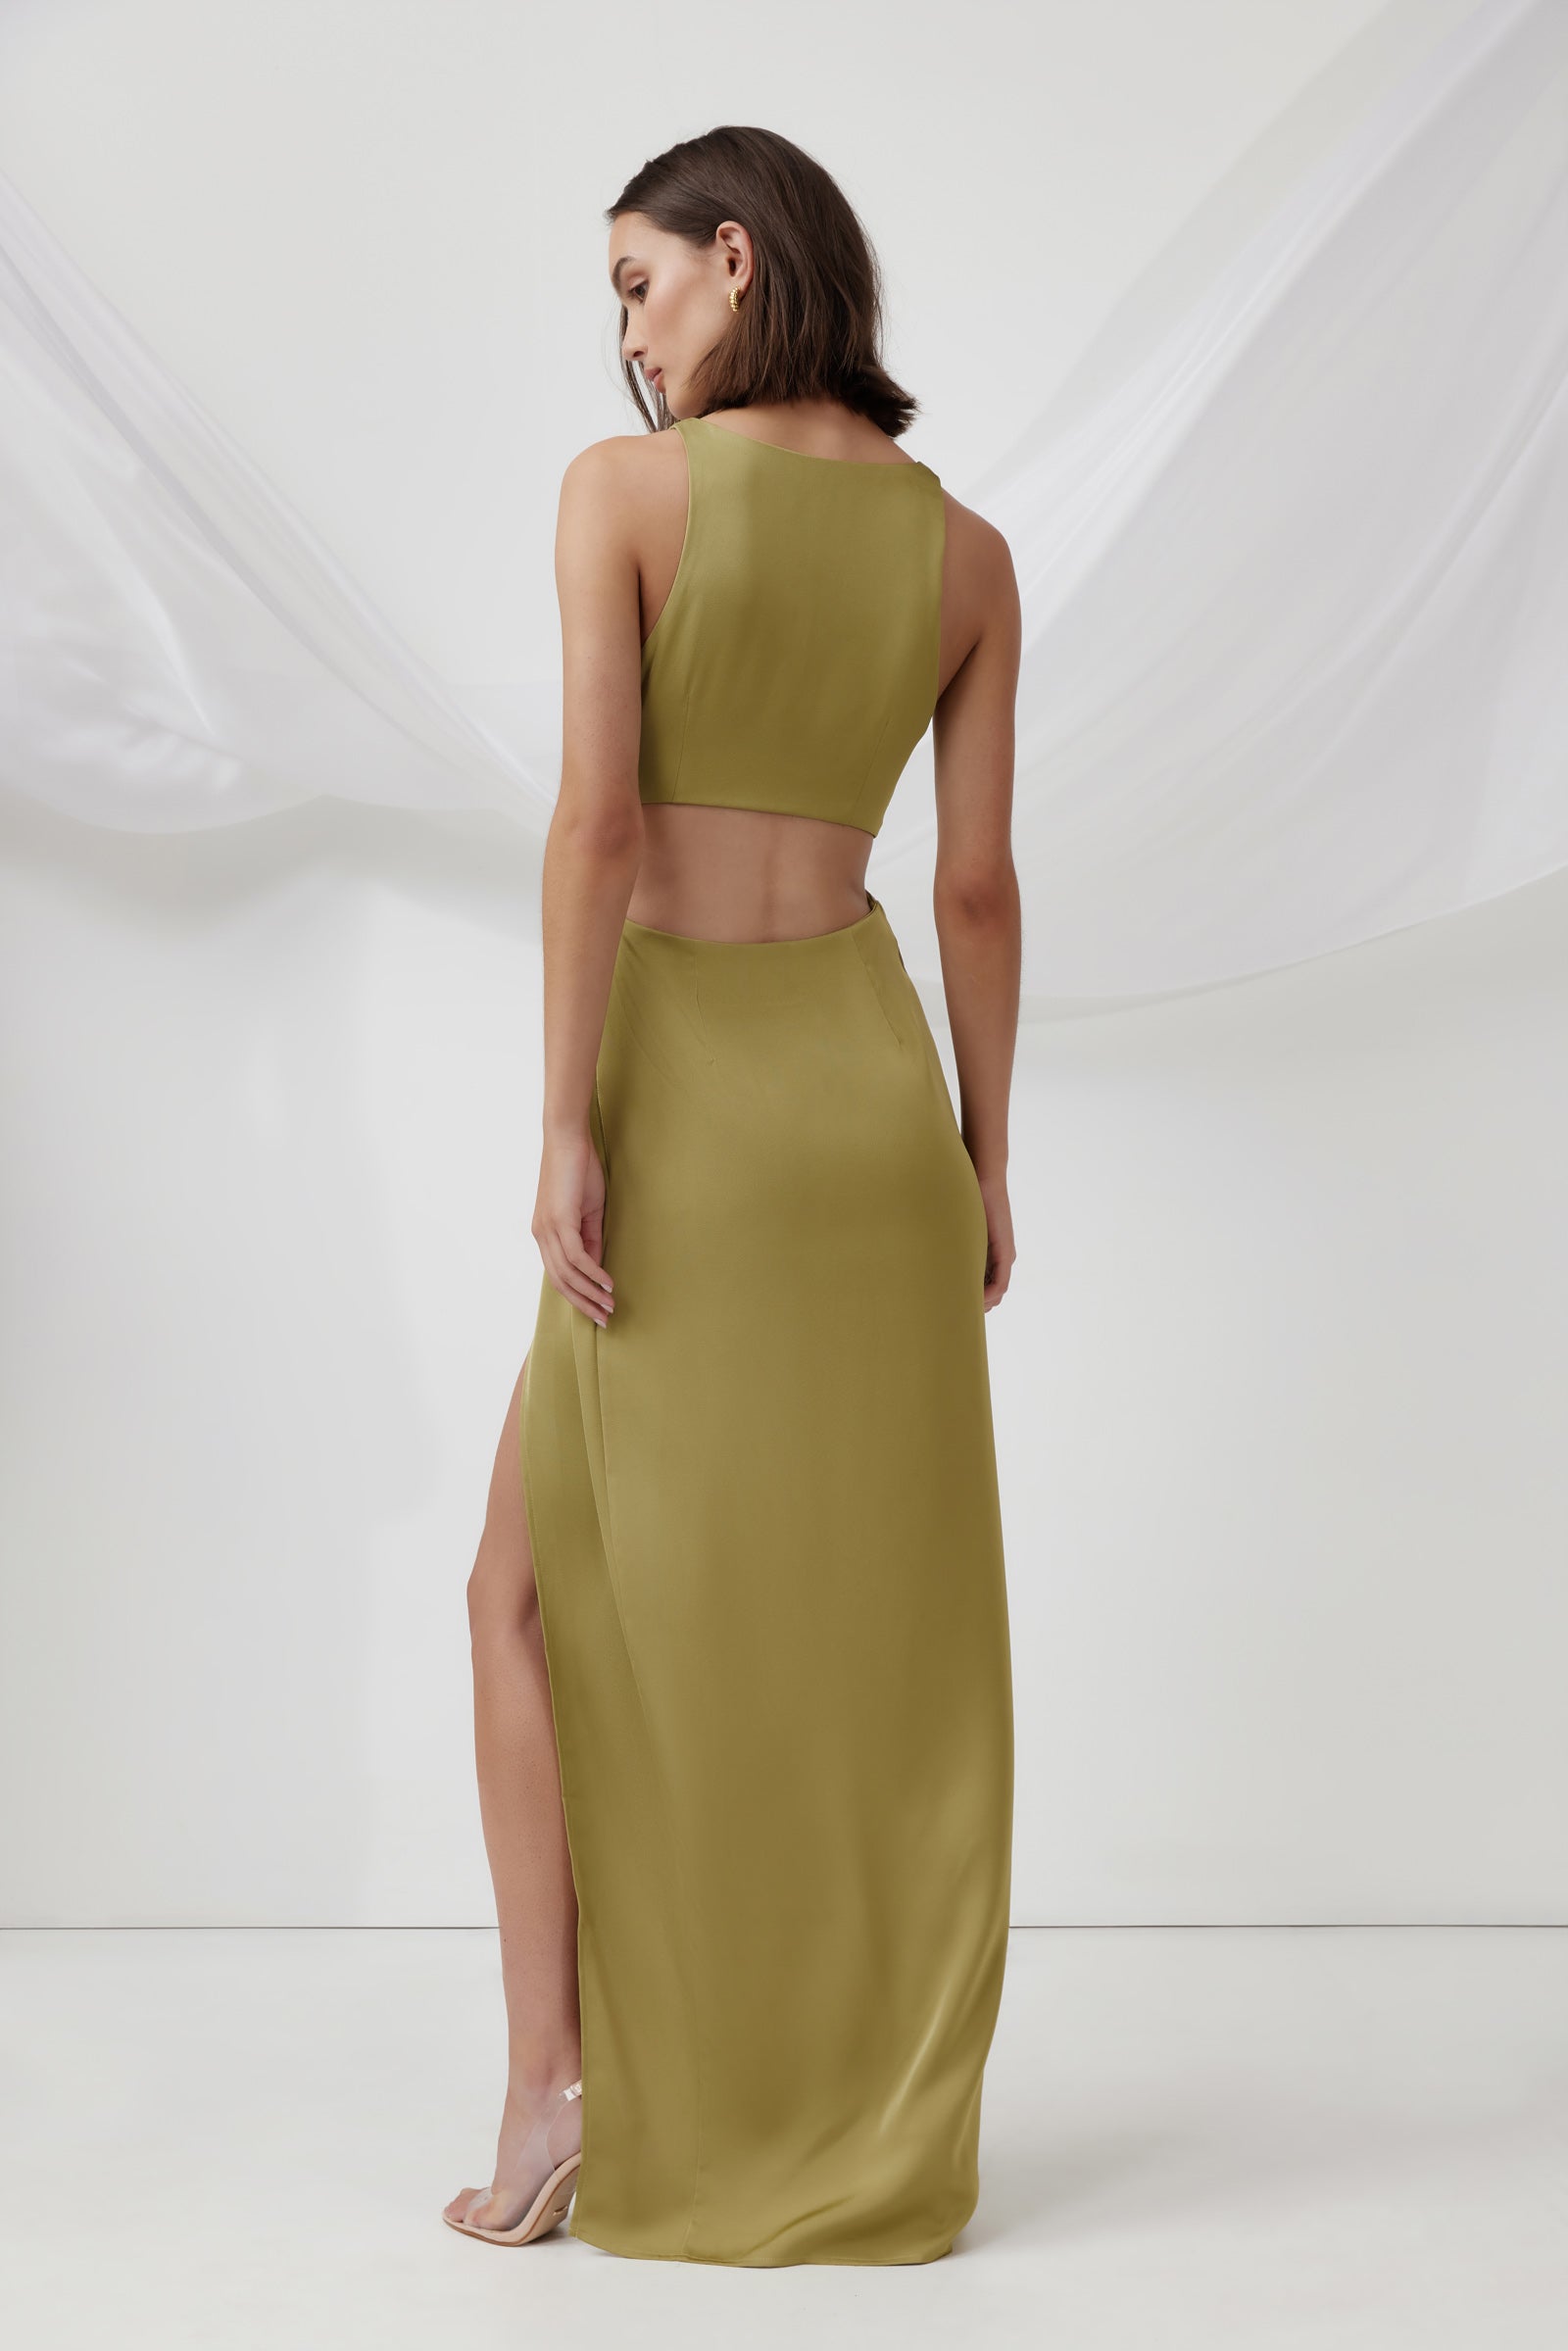 Marigold Dress - Olive